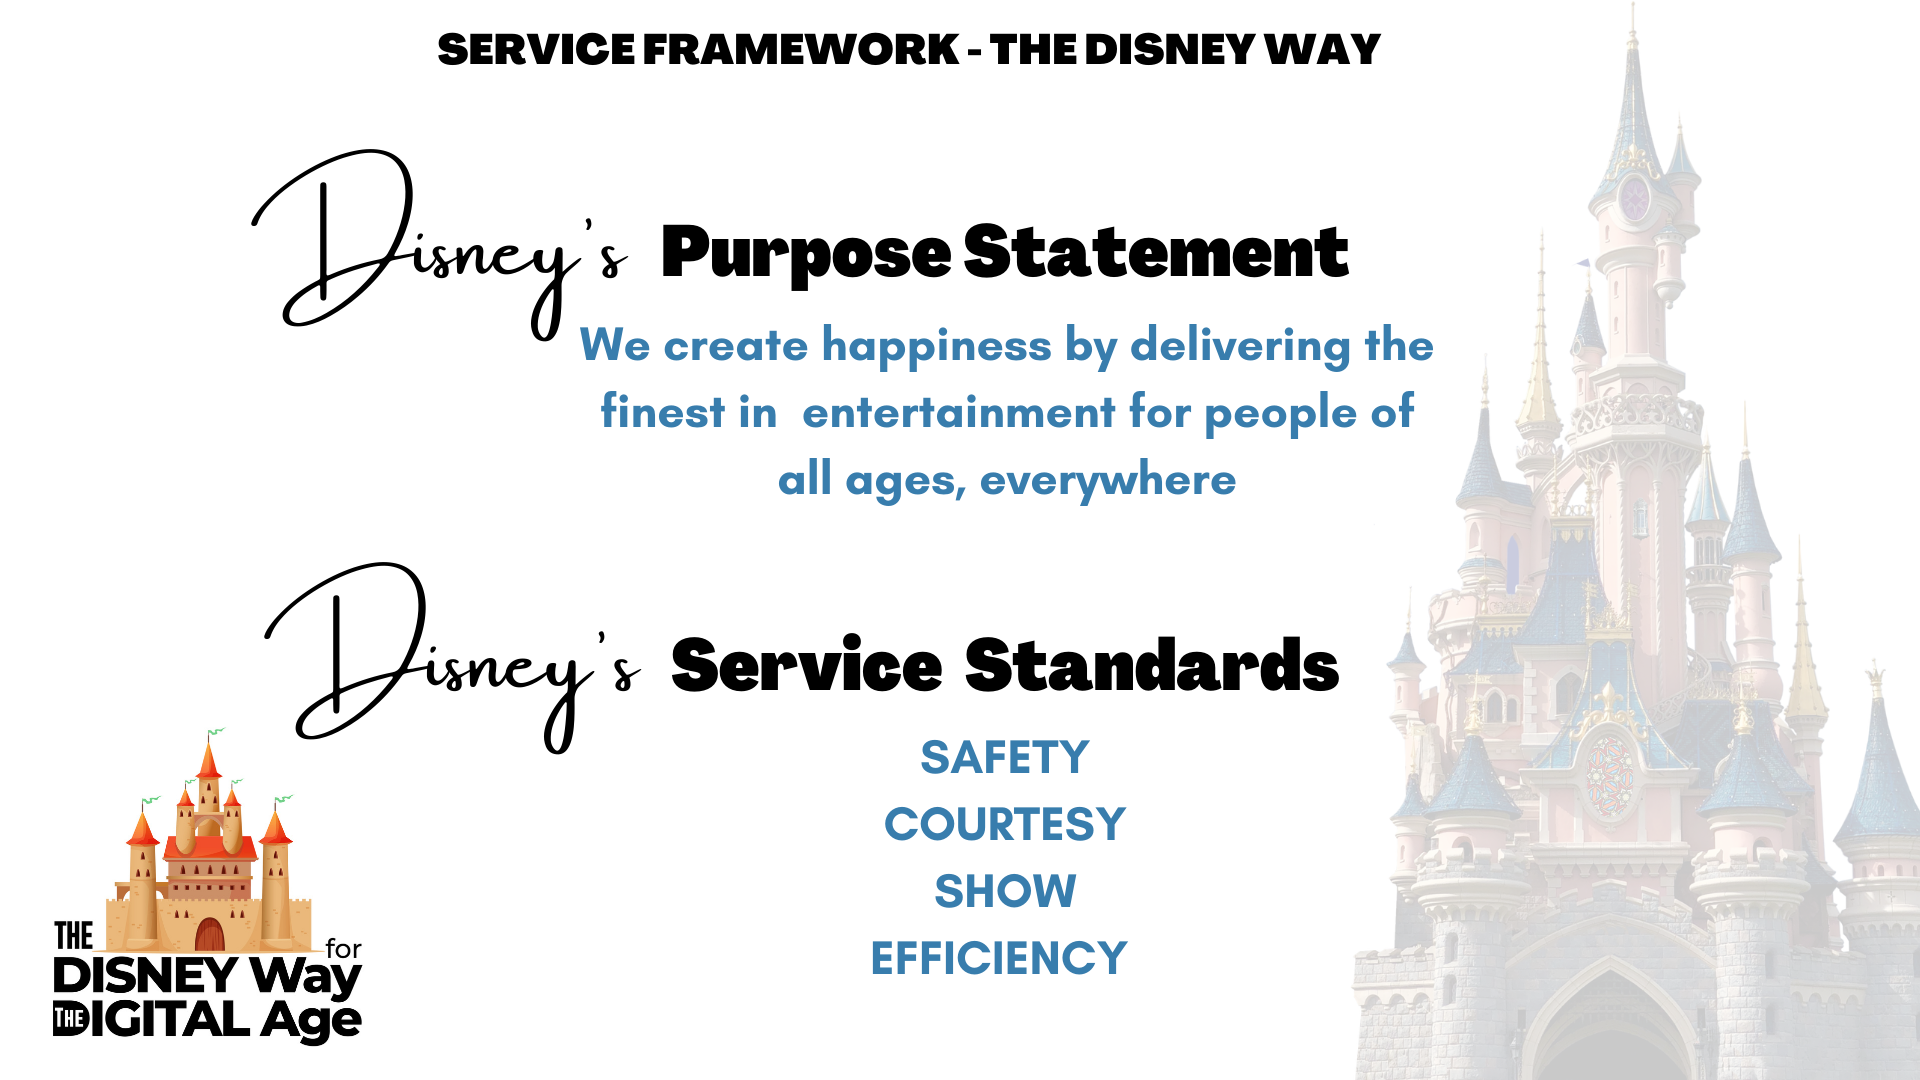 Disneys Purpose Statement and Service Standards